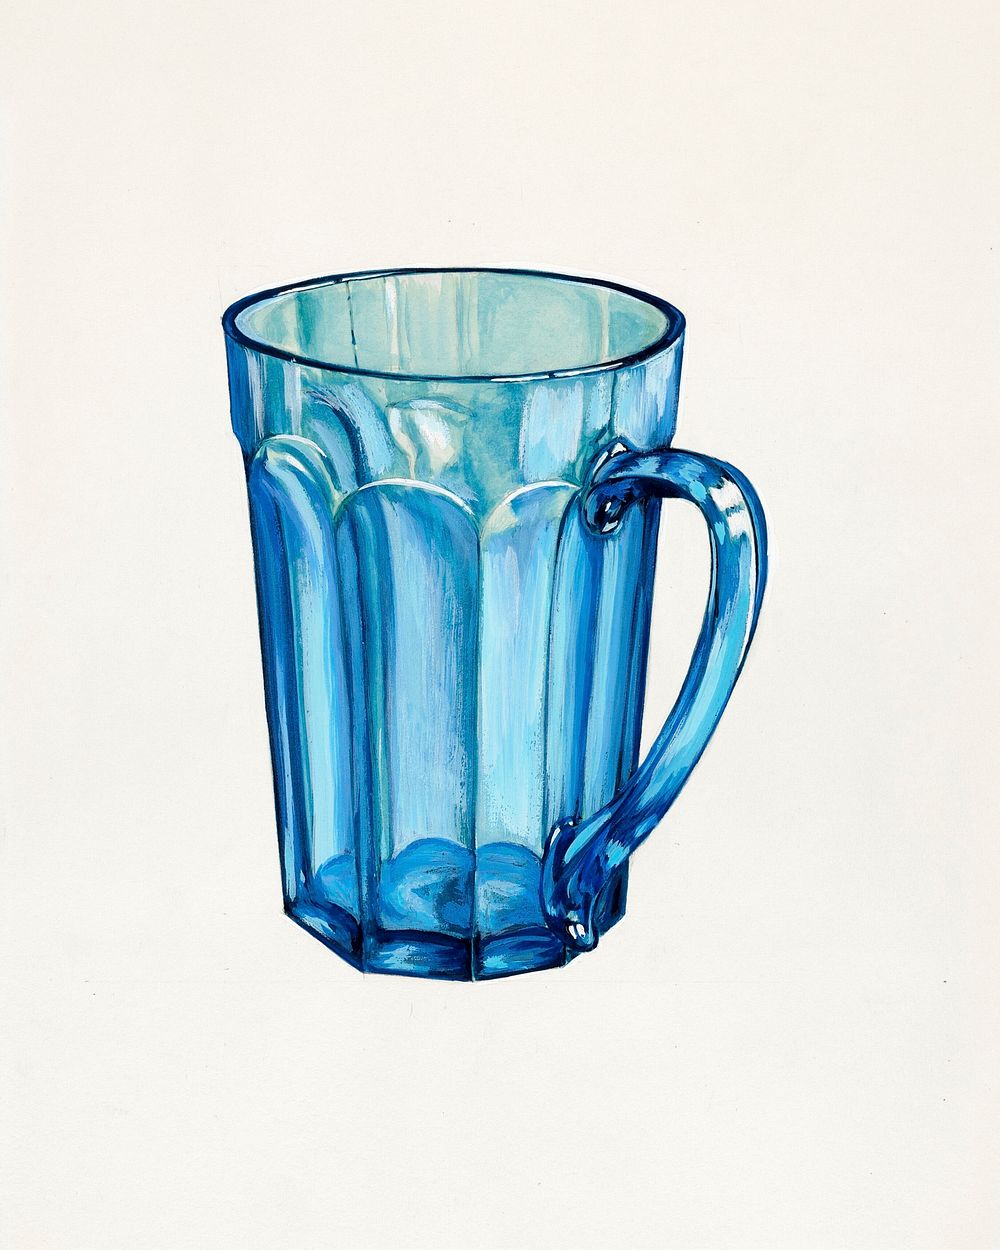 Blue Beer Mug (ca.1936) by Robert Stewart. Original from The National Gallery of Art. Digitally enhanced by rawpixel.